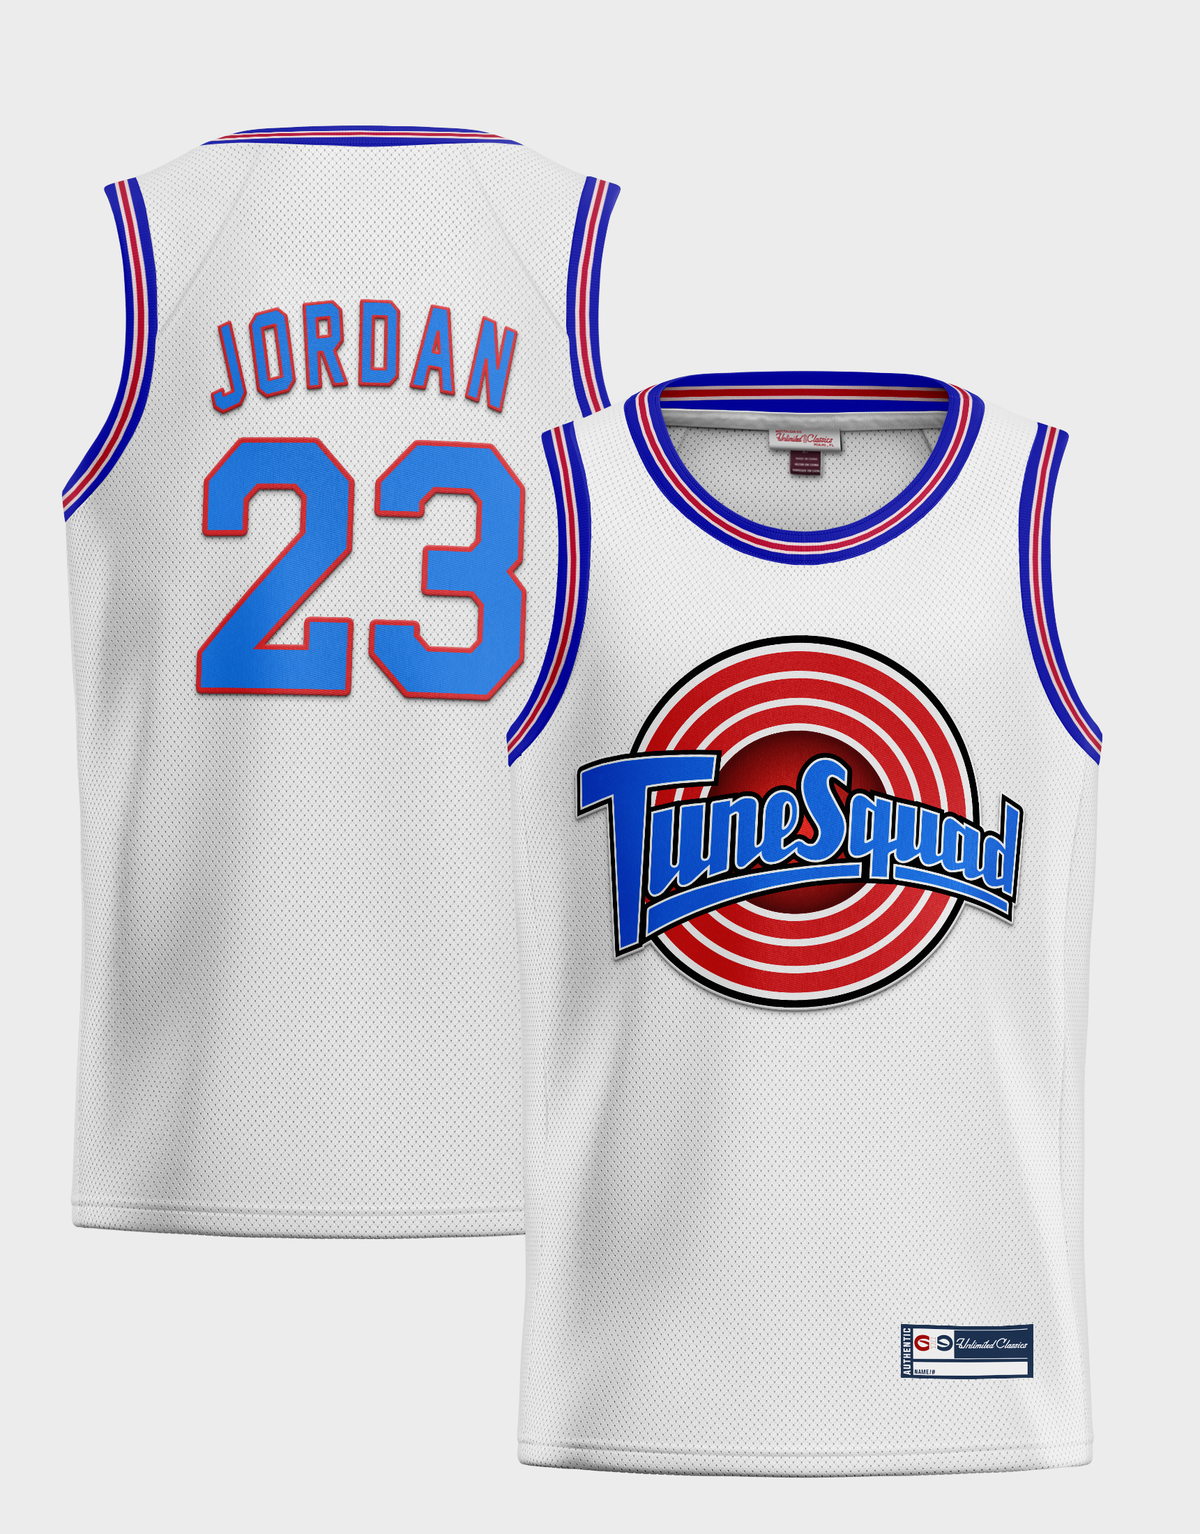 Kobe Bryant USA Basketball Team Nike Authentic Team Apparel XXL Length +2  Jersey